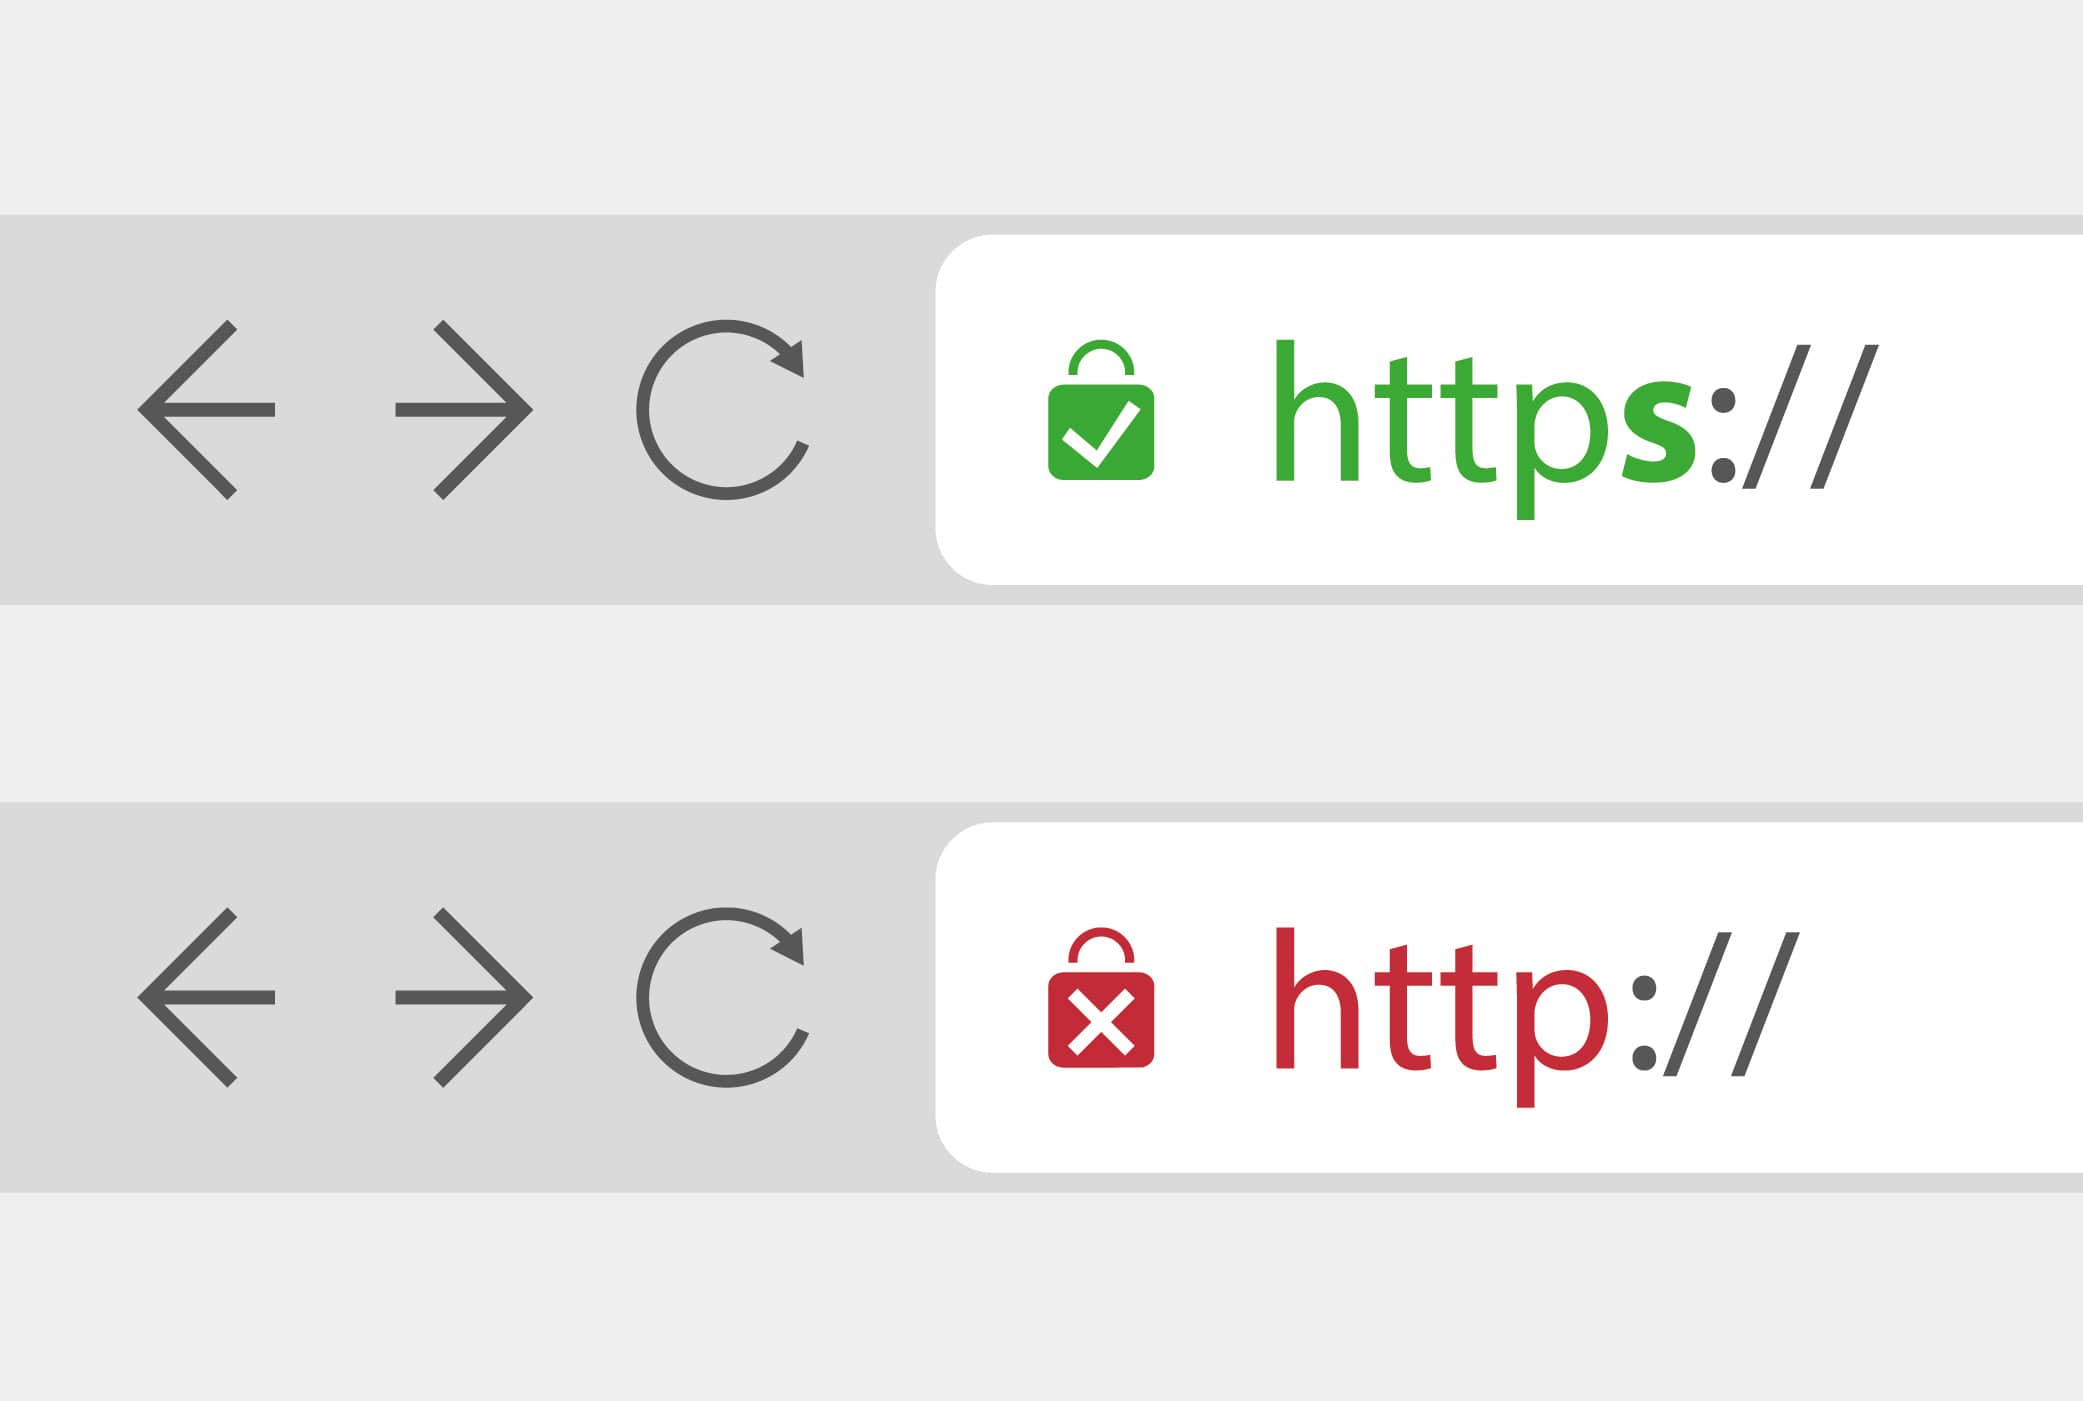 Переход с HTTP на HTTPS